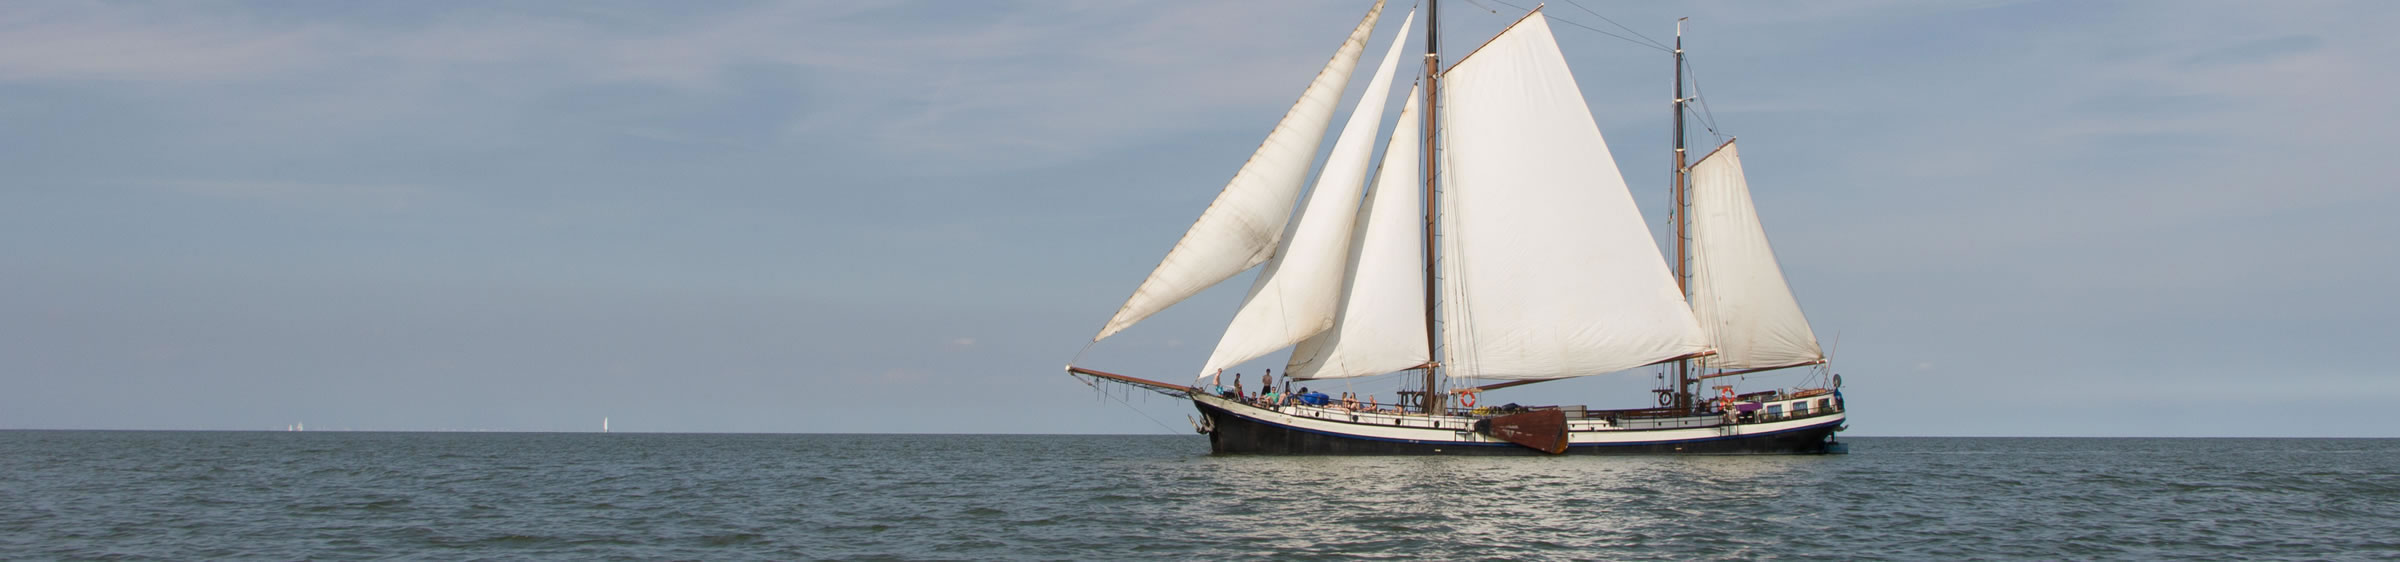 Kurzwochenende segeln IJsselmeer